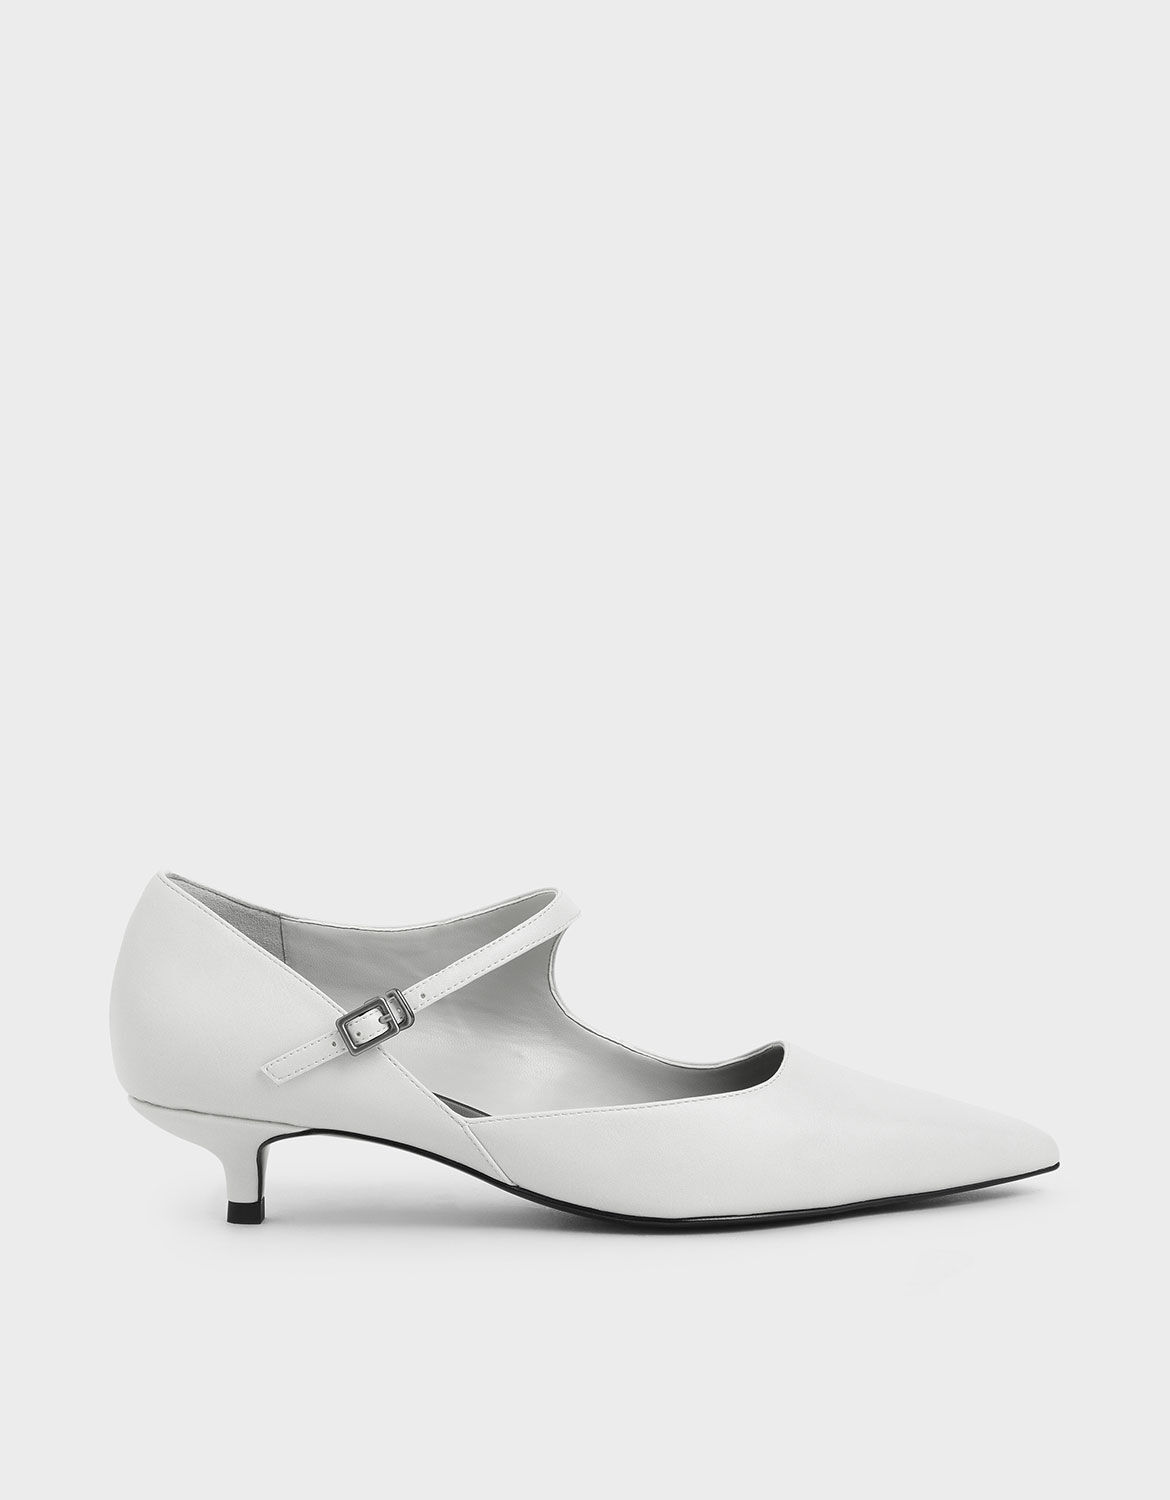 White Asymmetric Mary Jane Kitten Heels 